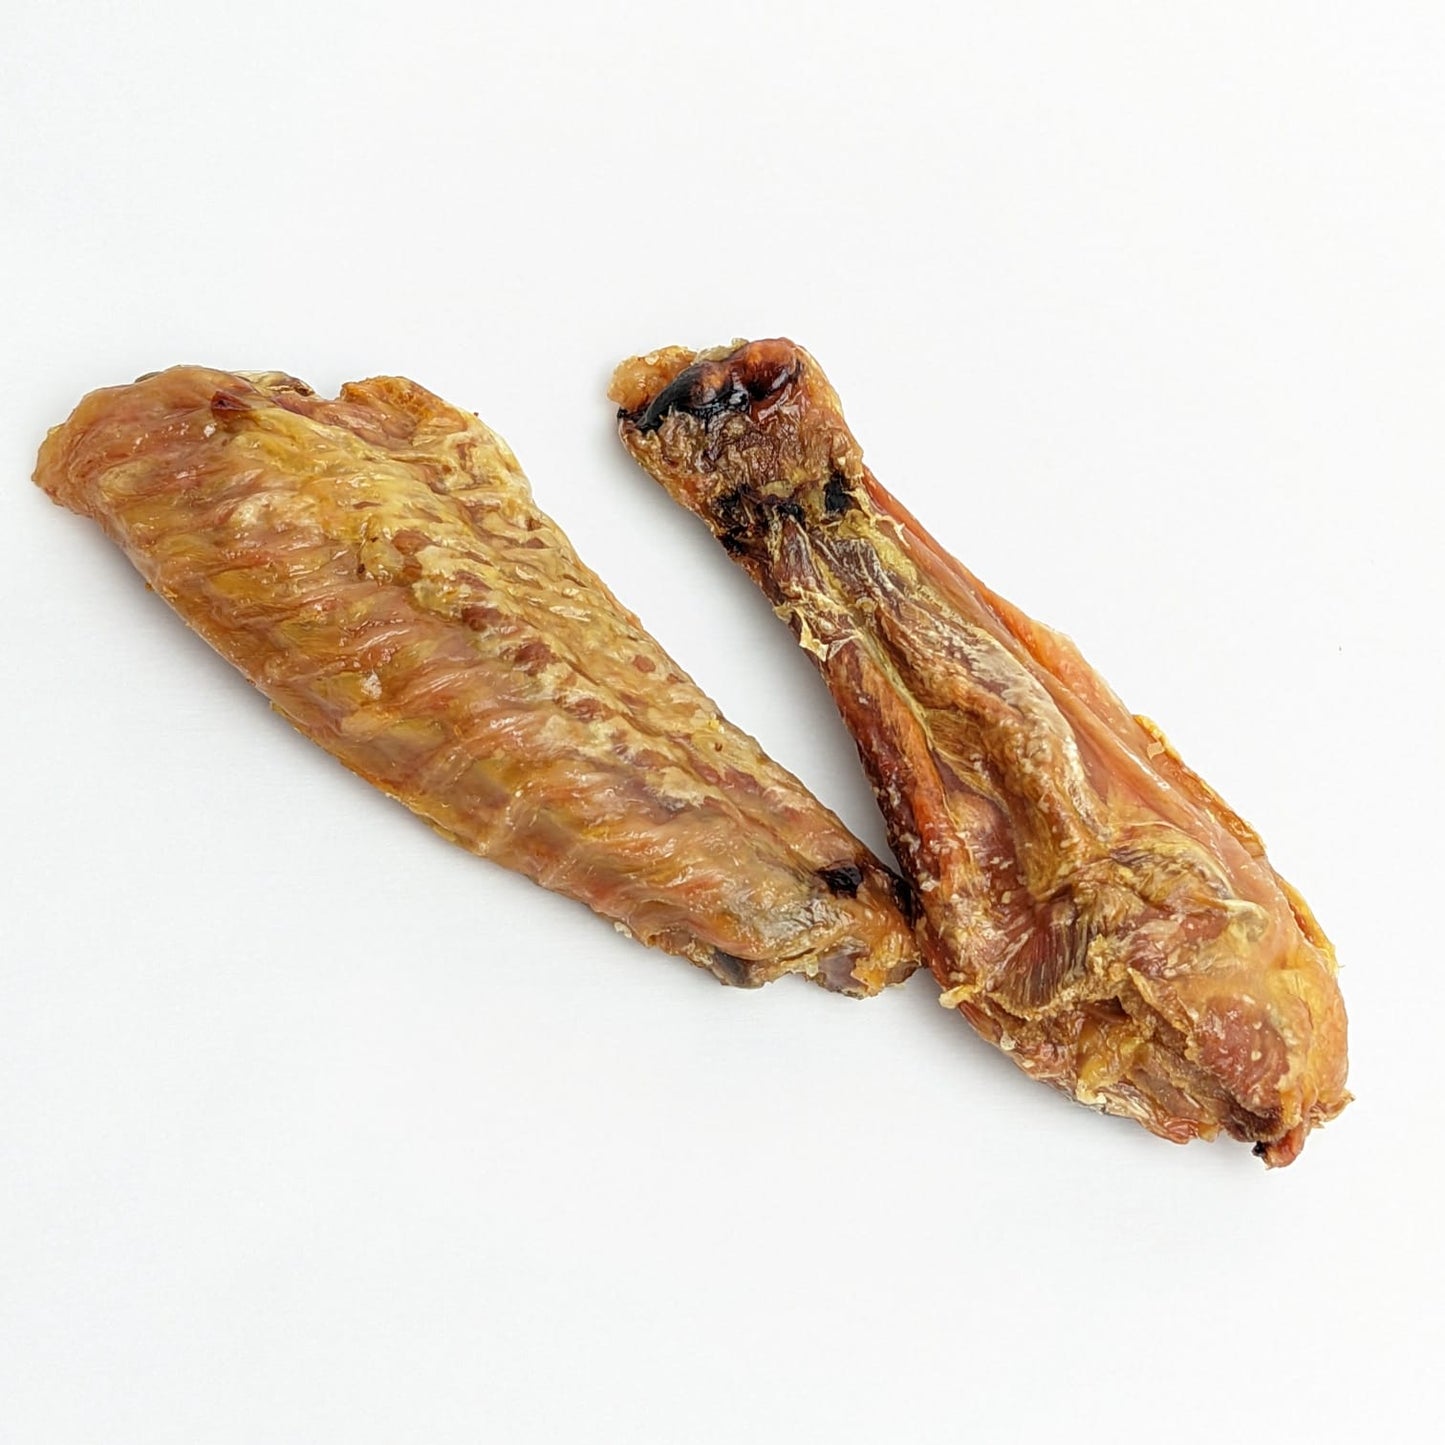 Woofur - Dehydrated Turkey Wings (Organic)